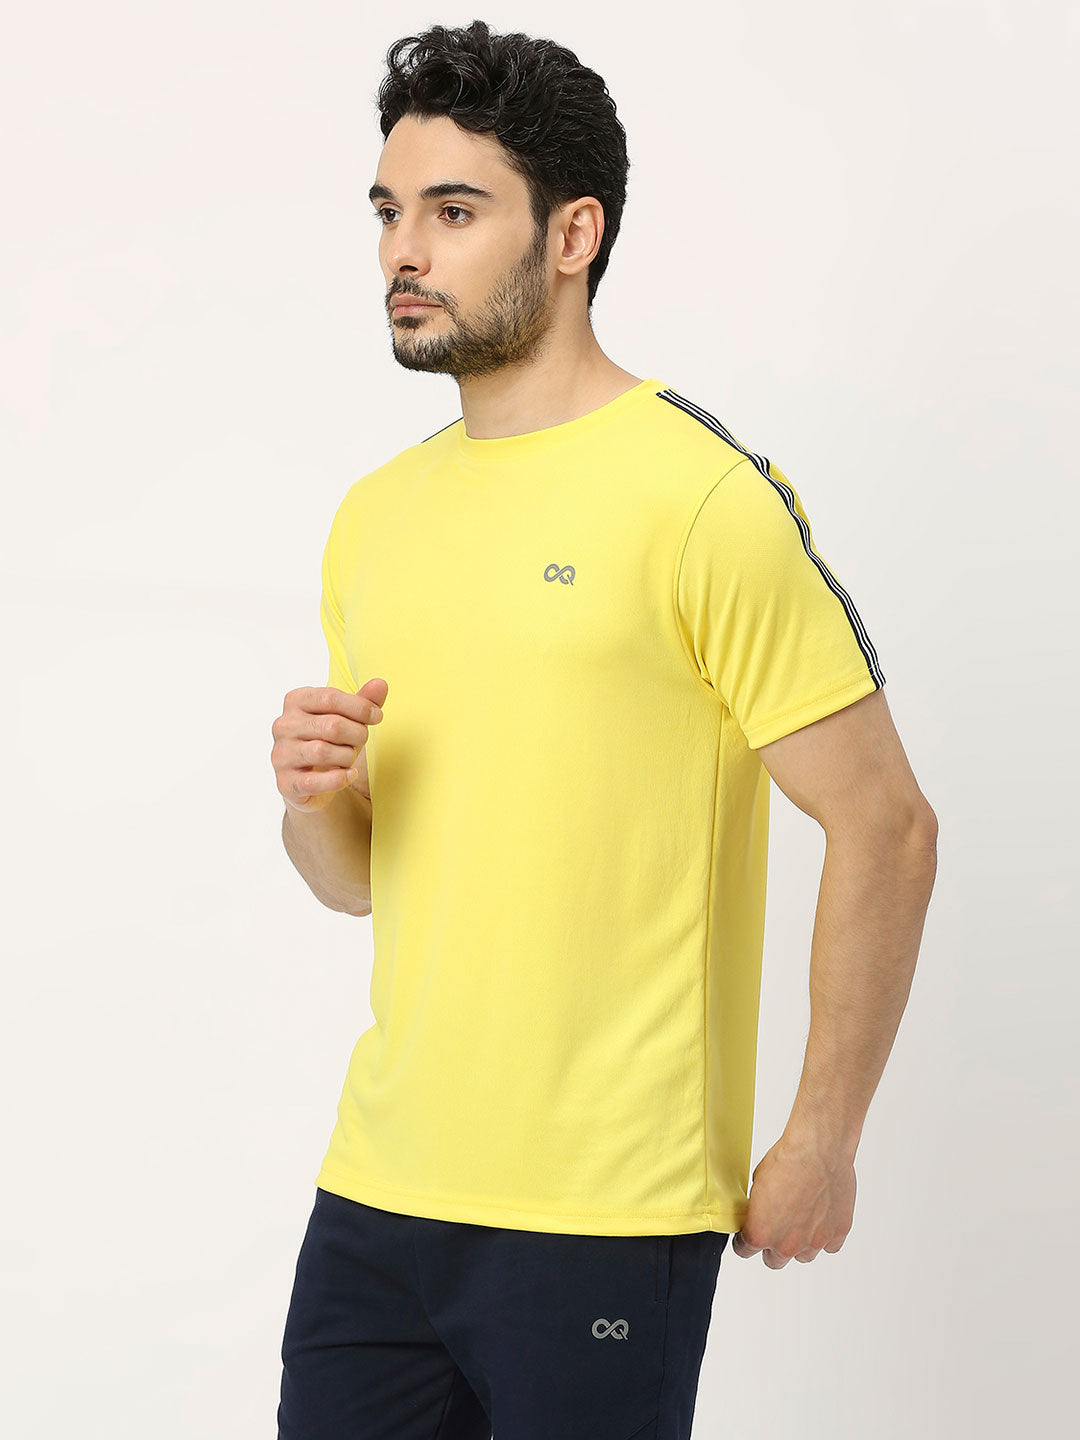 Men's Striped Sports T-Shirt - Yellow